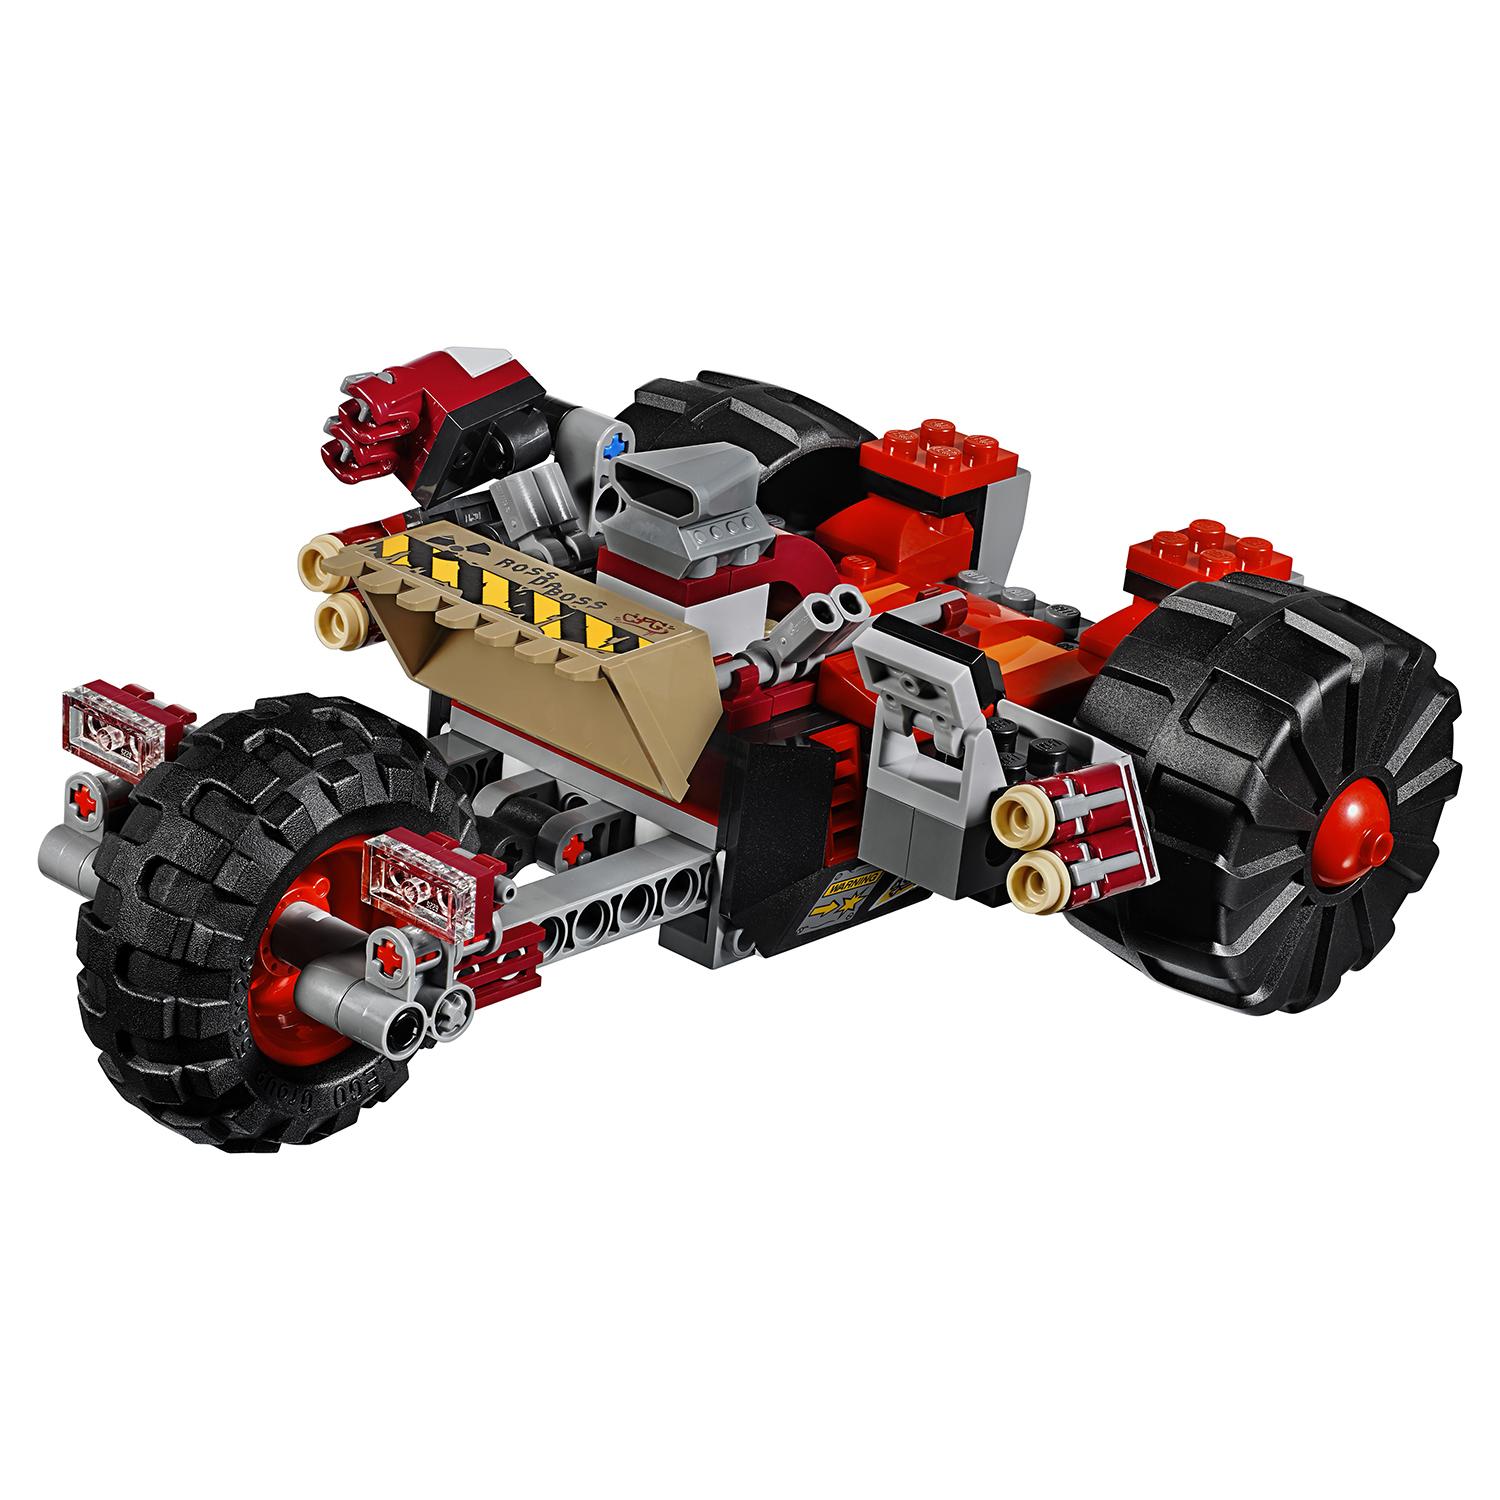 Lego Super Heroes 76078 Халк против Красного Халка